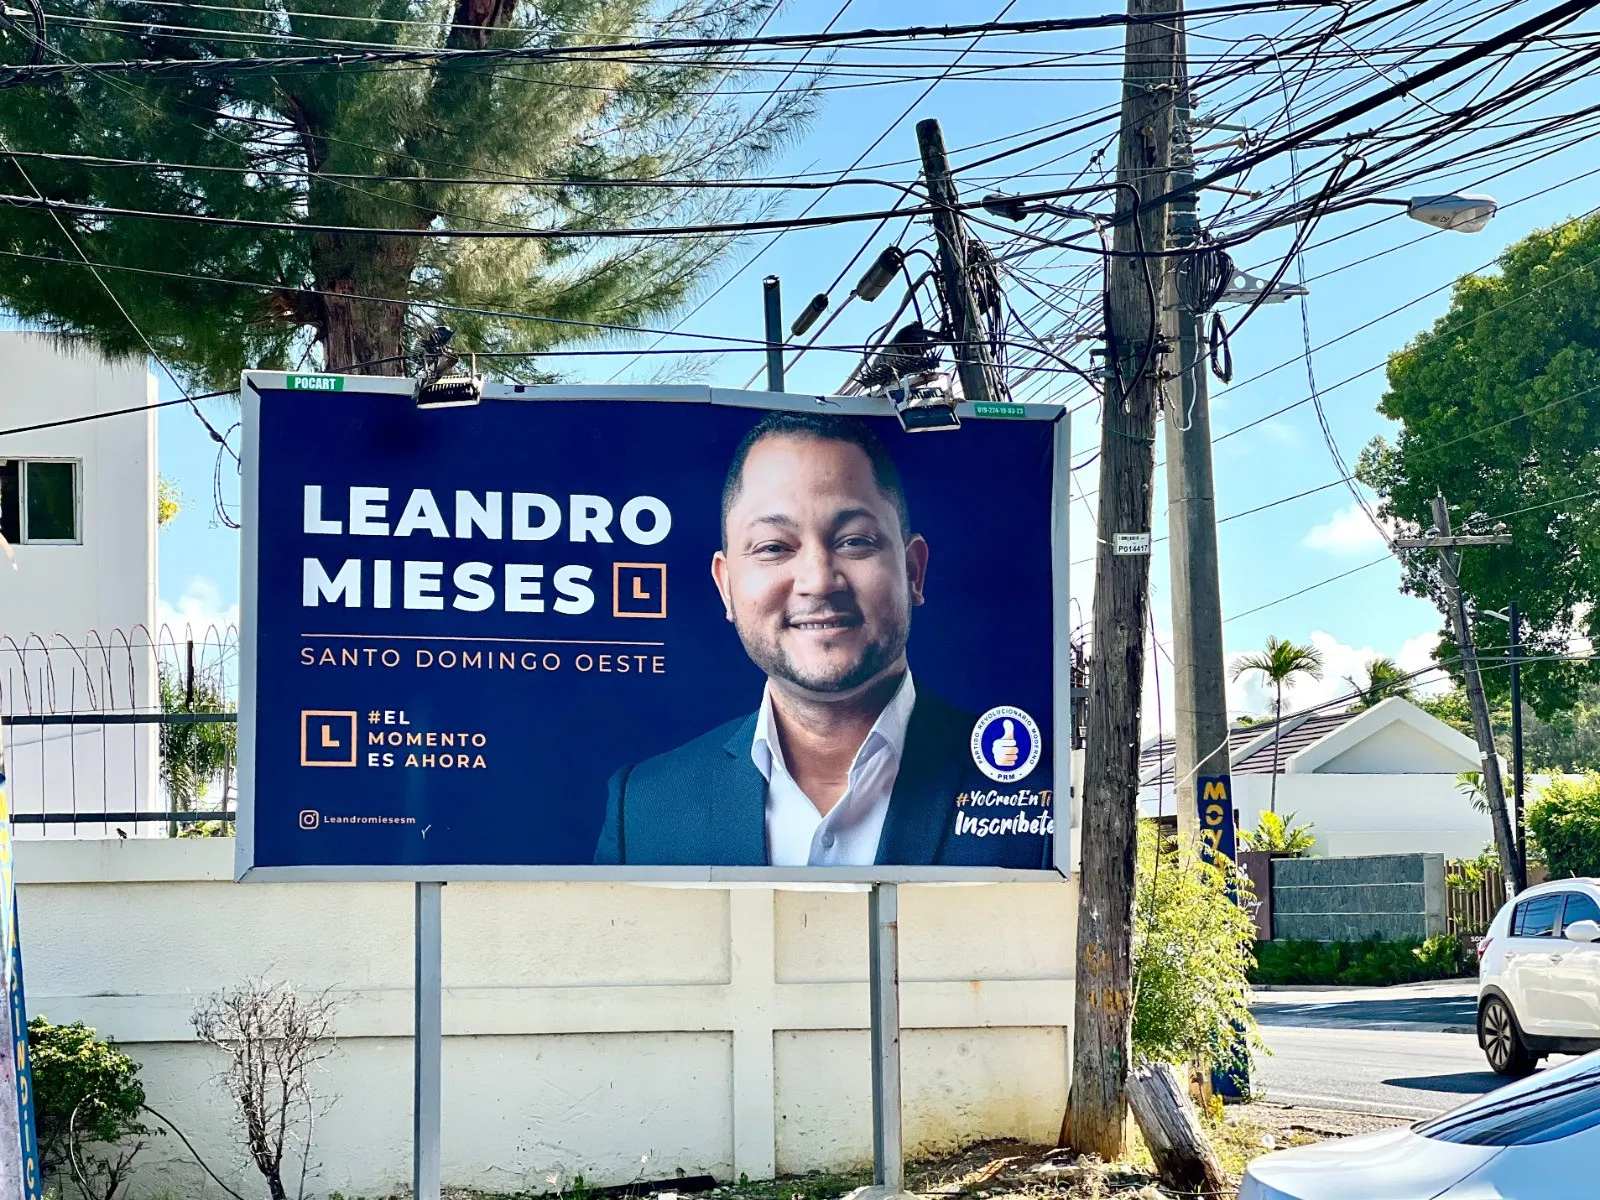 Ciudadanos promueven a Leandro Mieses para diputado por Santo Domingo Oeste